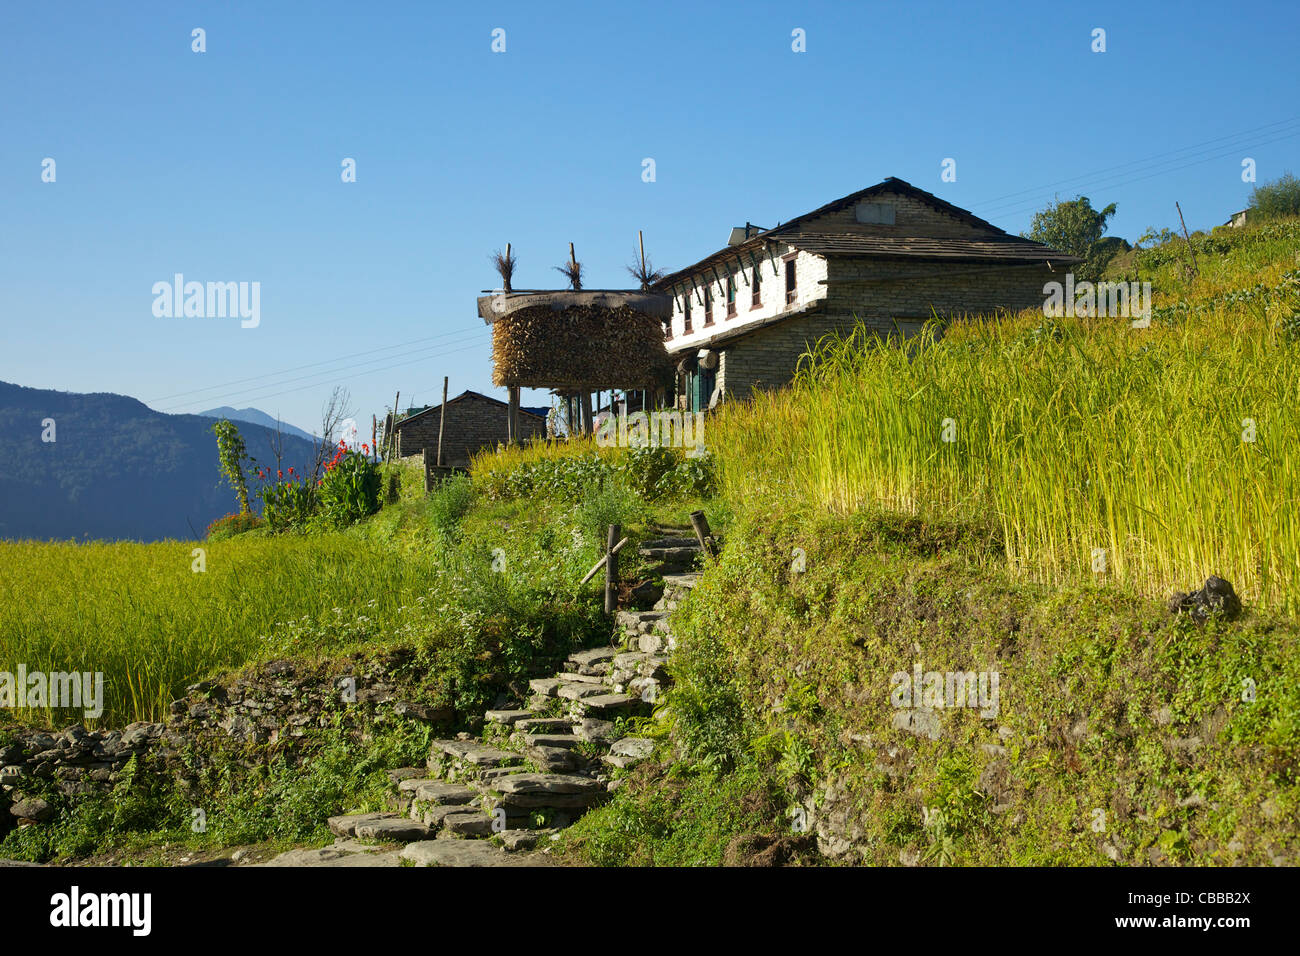 Rice field and traditional farmhouse, trek from Ghandruk to Naya Pul, Annapurna Sanctuary Region, Nepal, Asia Stock Photo